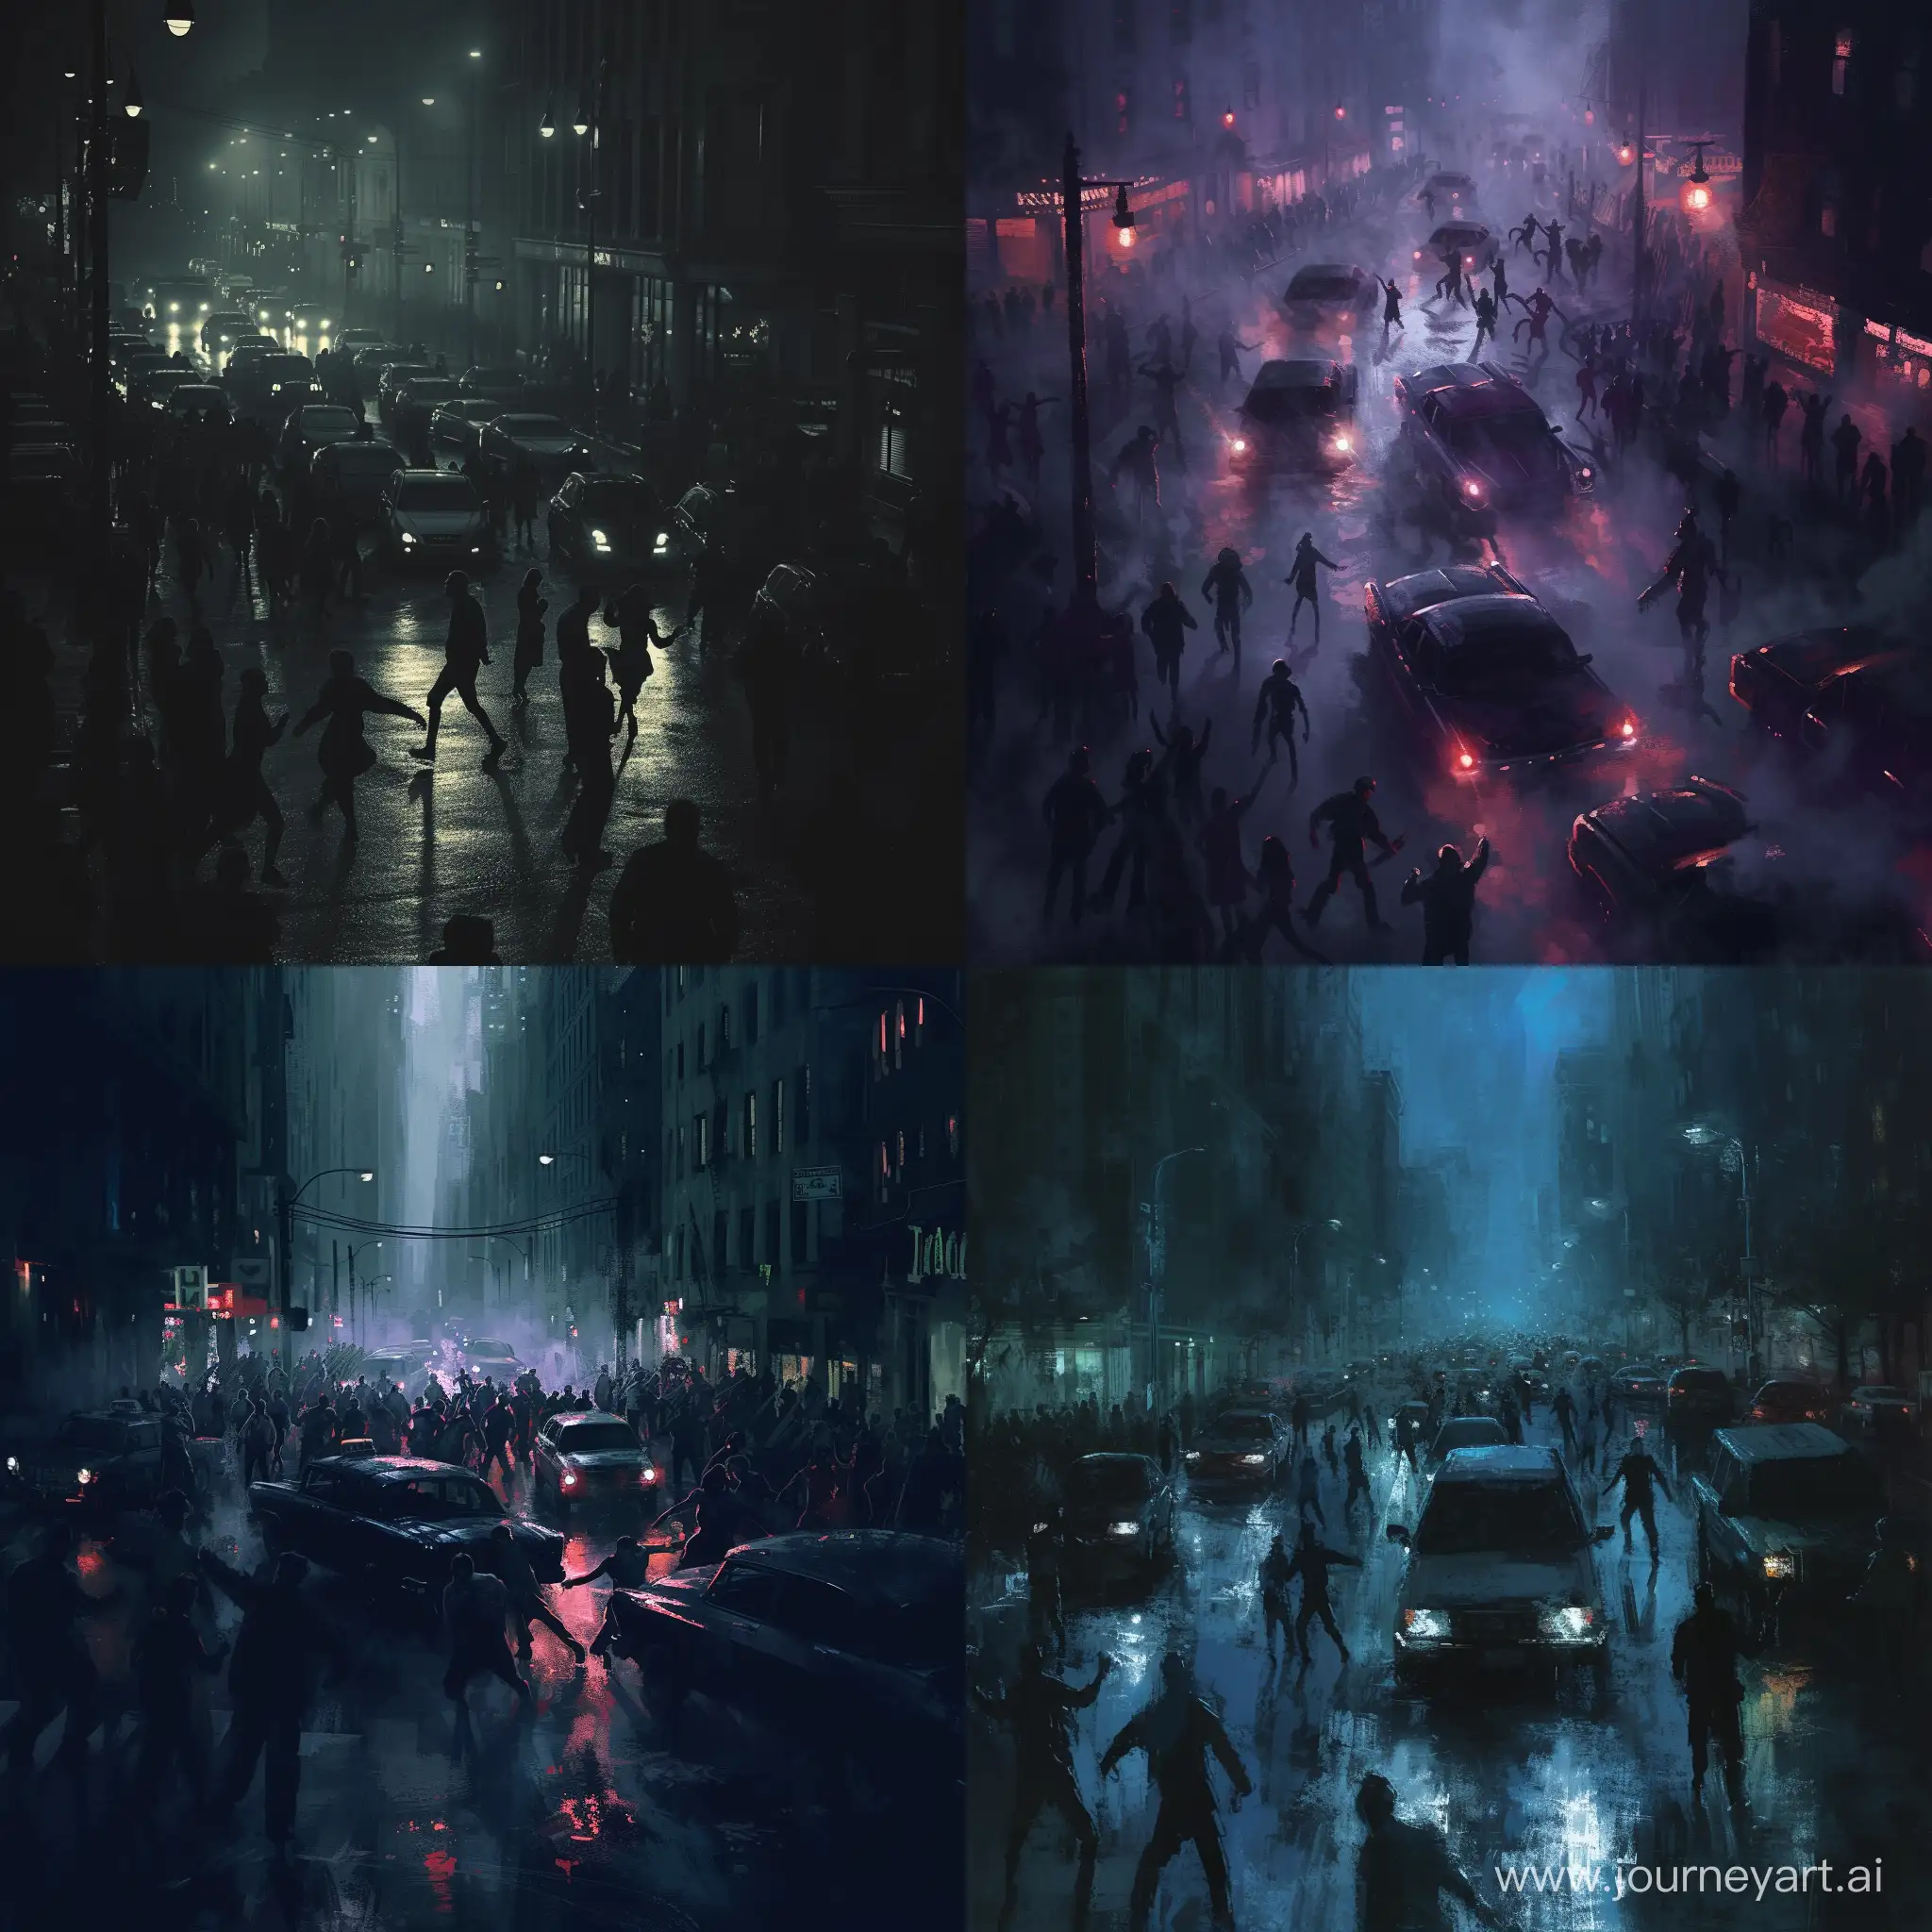 Vibrant-Nightlife-on-Gloomy-Streets-Dynamic-Dance-Crowd-and-Dark-Cars